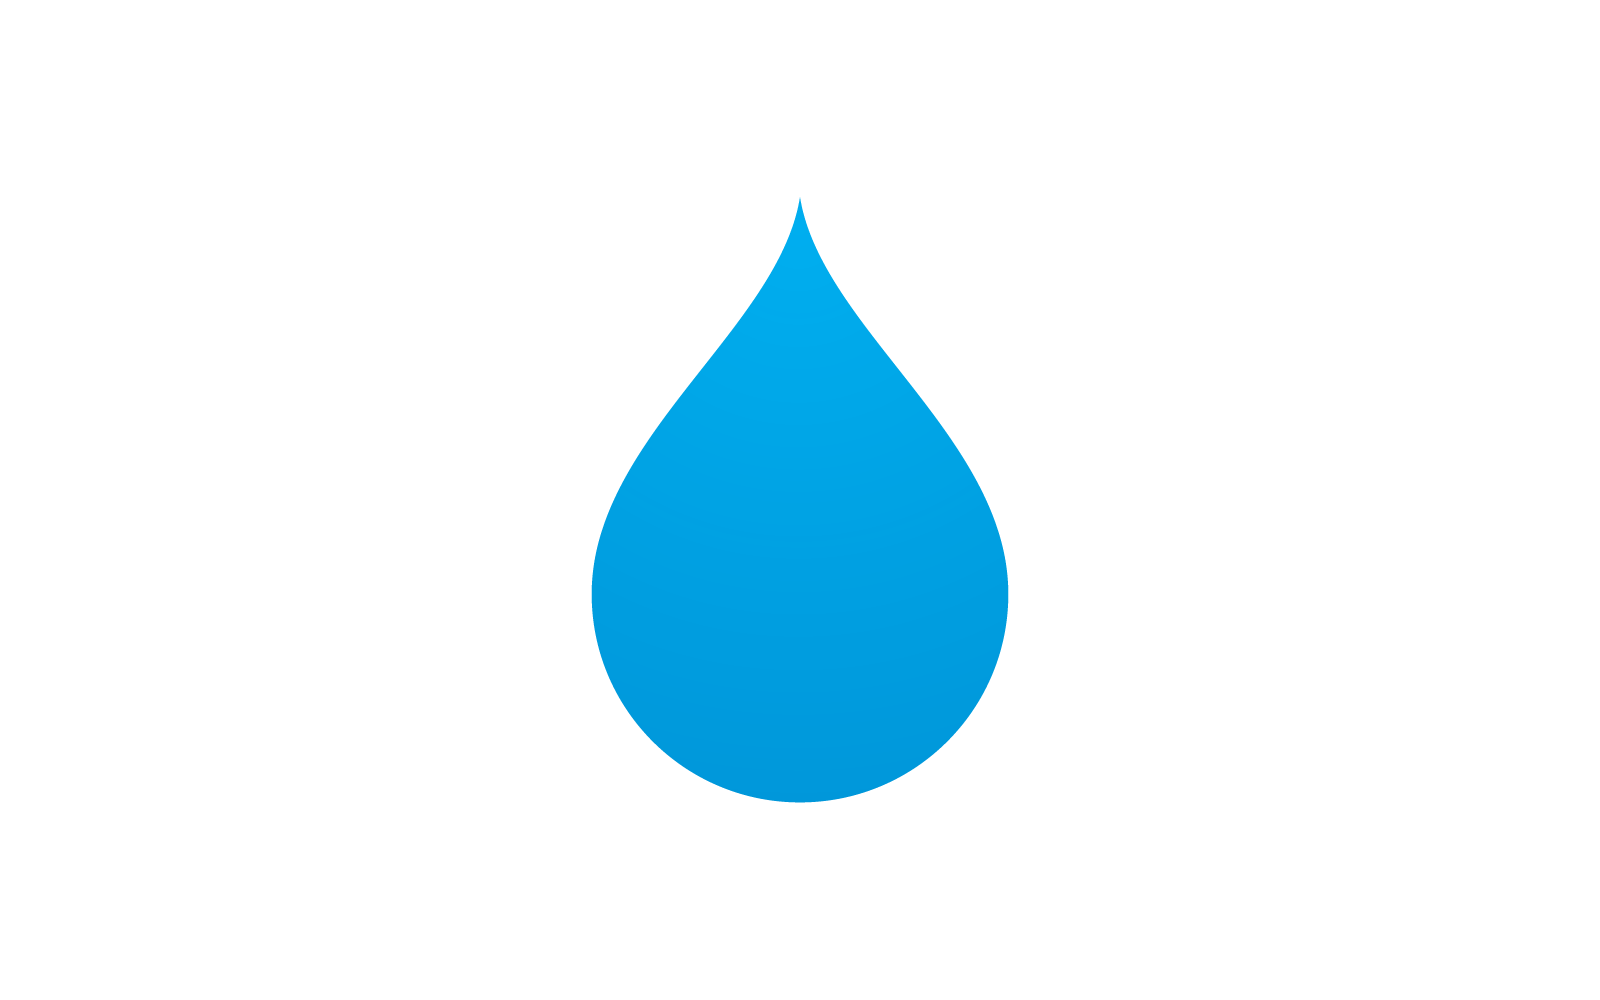 Water drop illustration logo vector design template